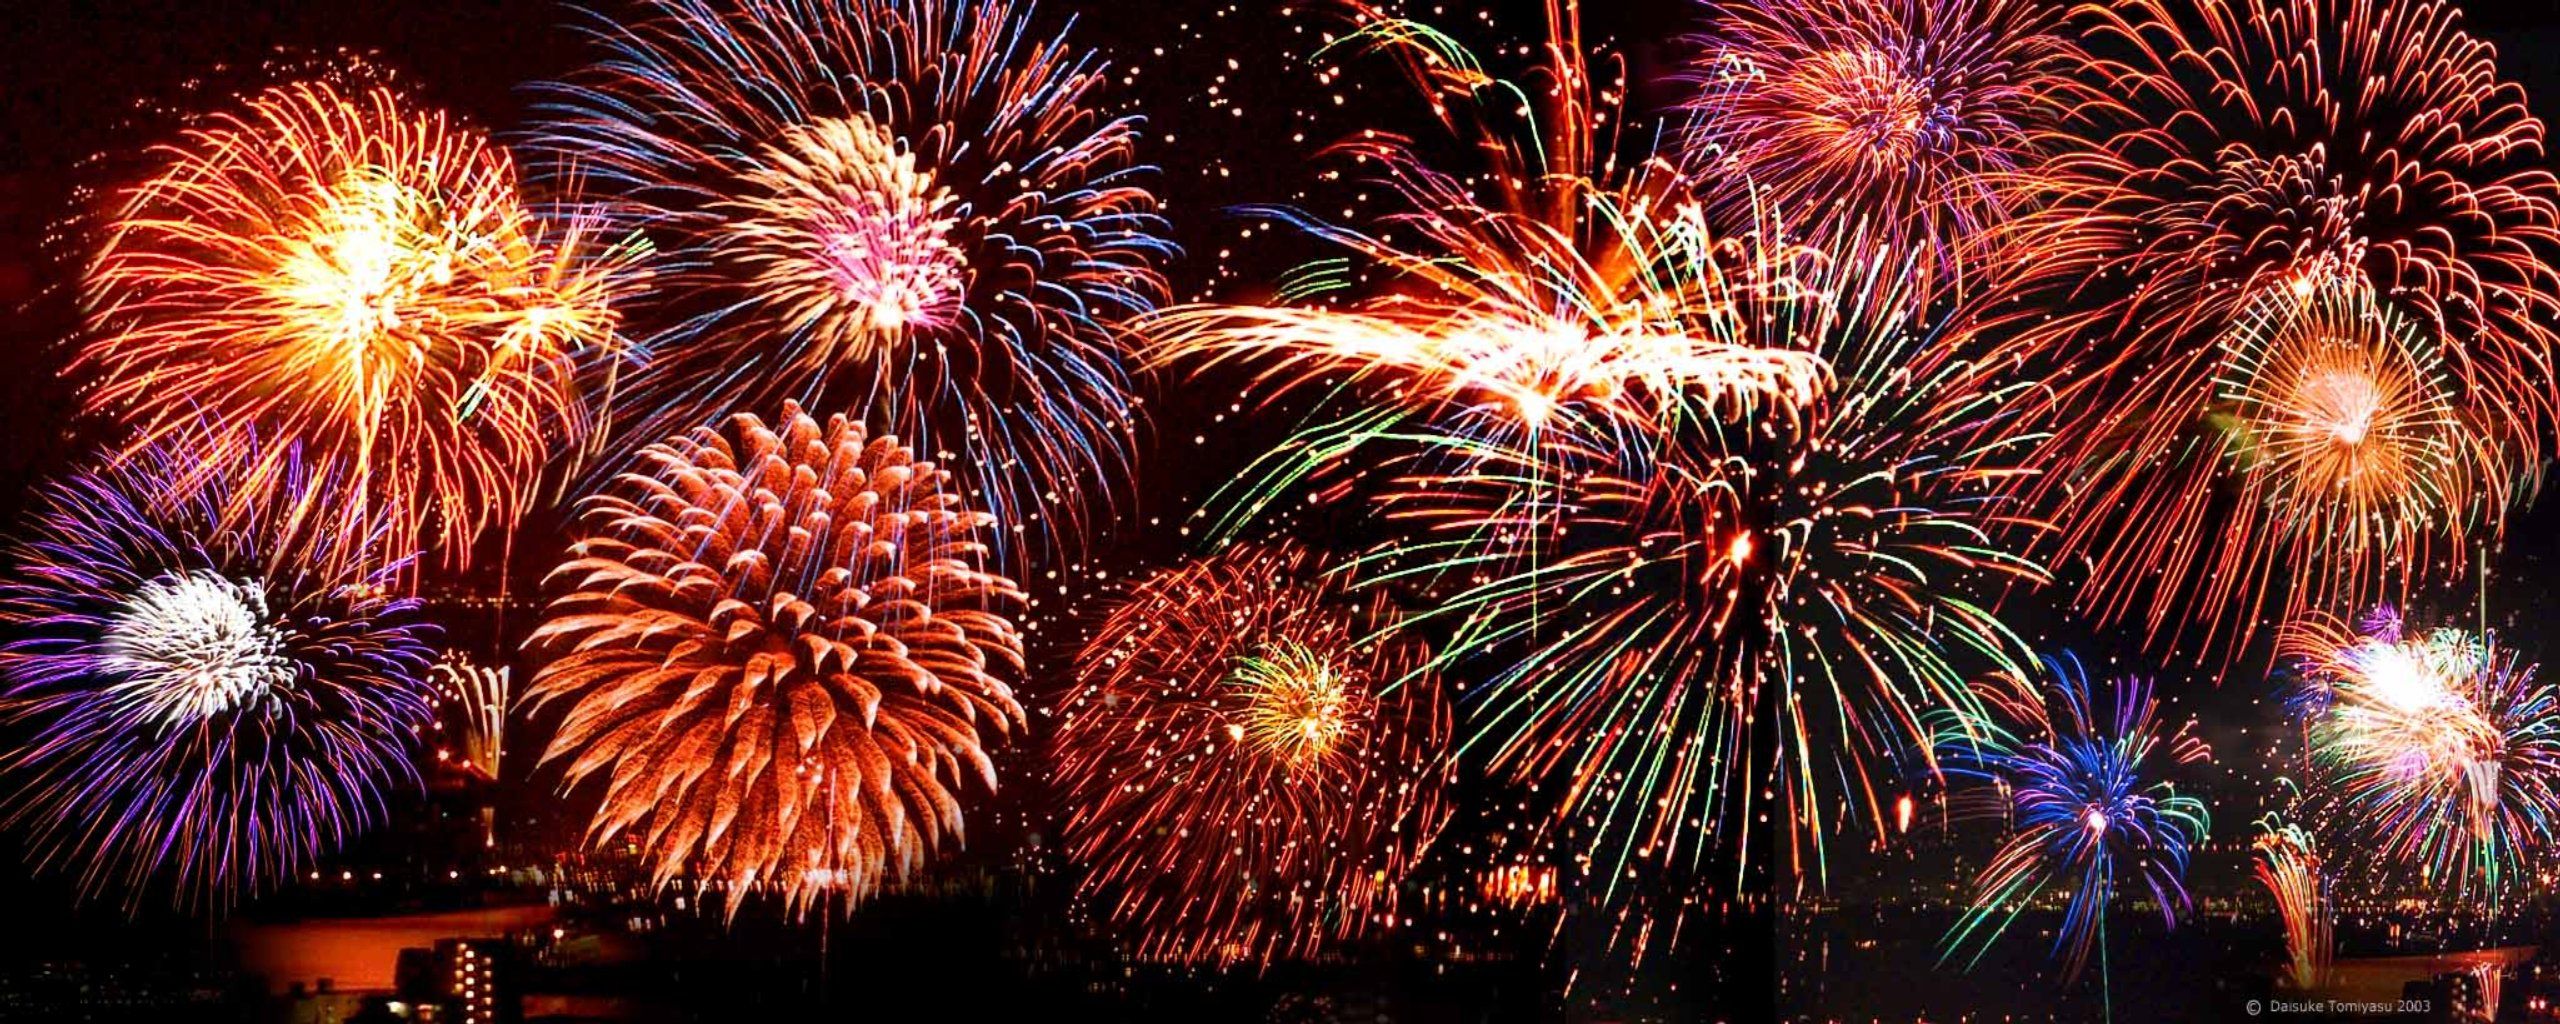 fireworks new year desktop wallpaper download fireworks new year